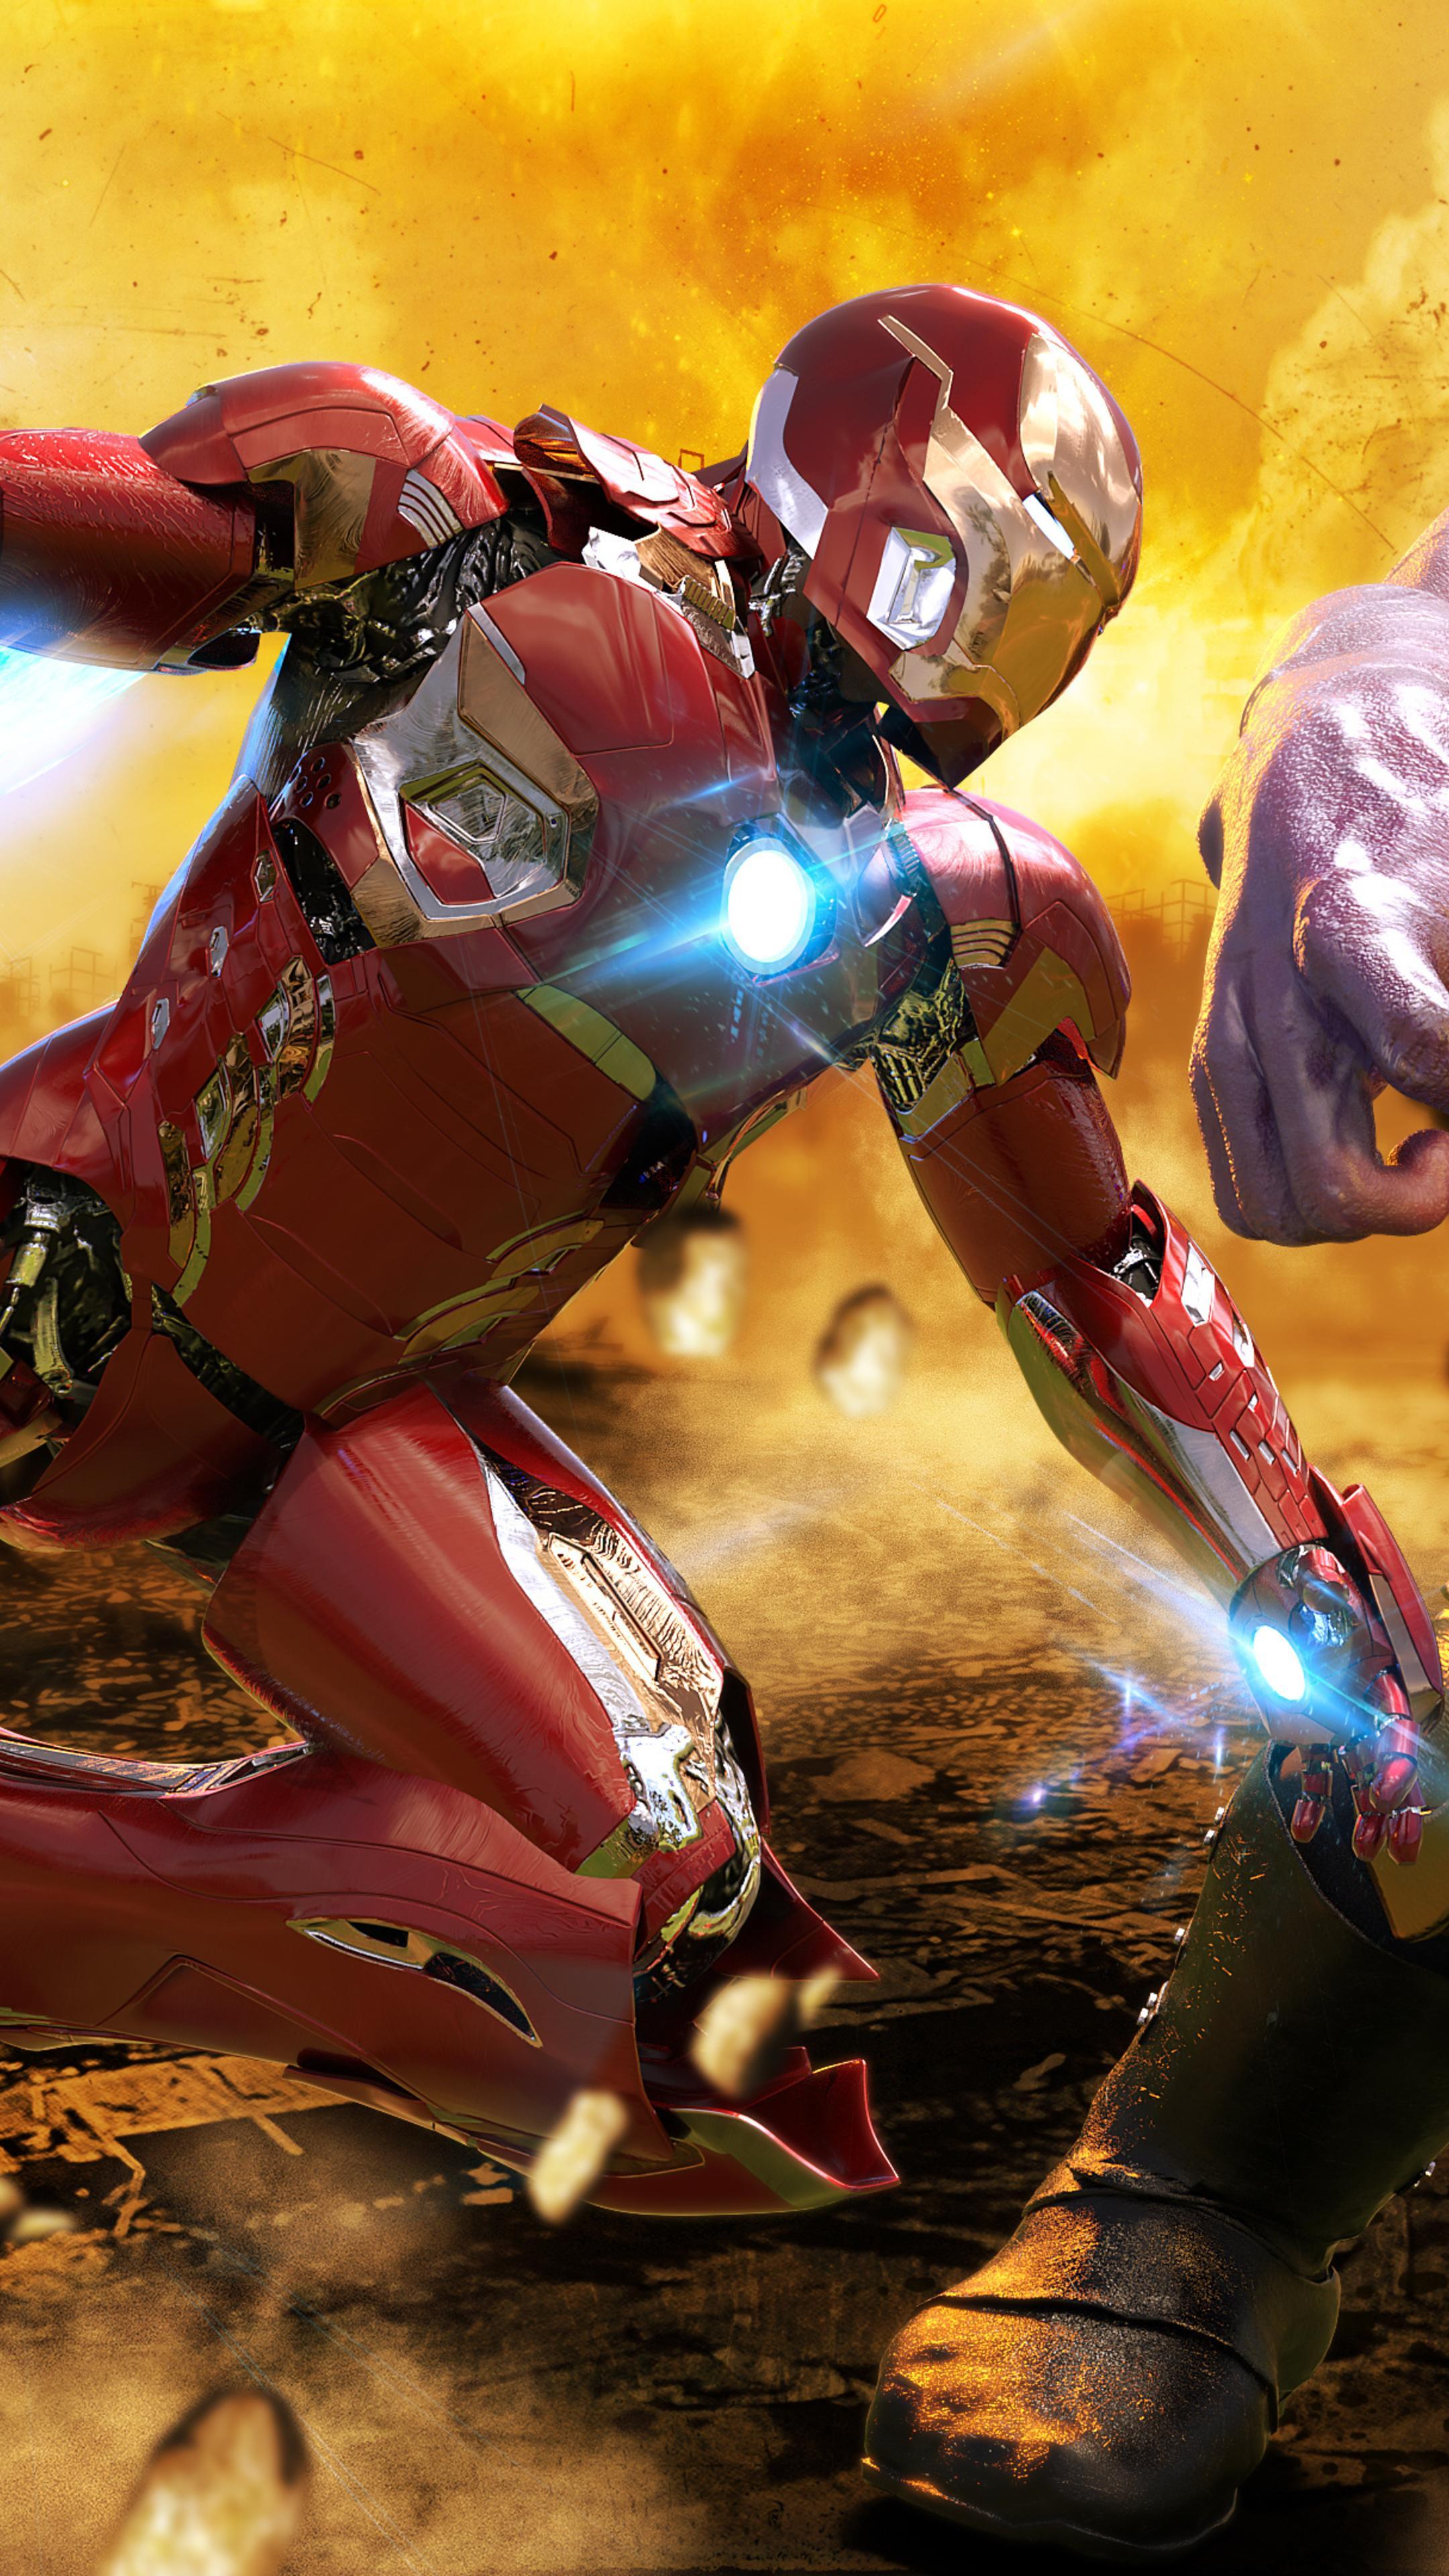 Iron Man Vs Thanos 4k Sony Xperia X, XZ, Z5 Premium HD 4k